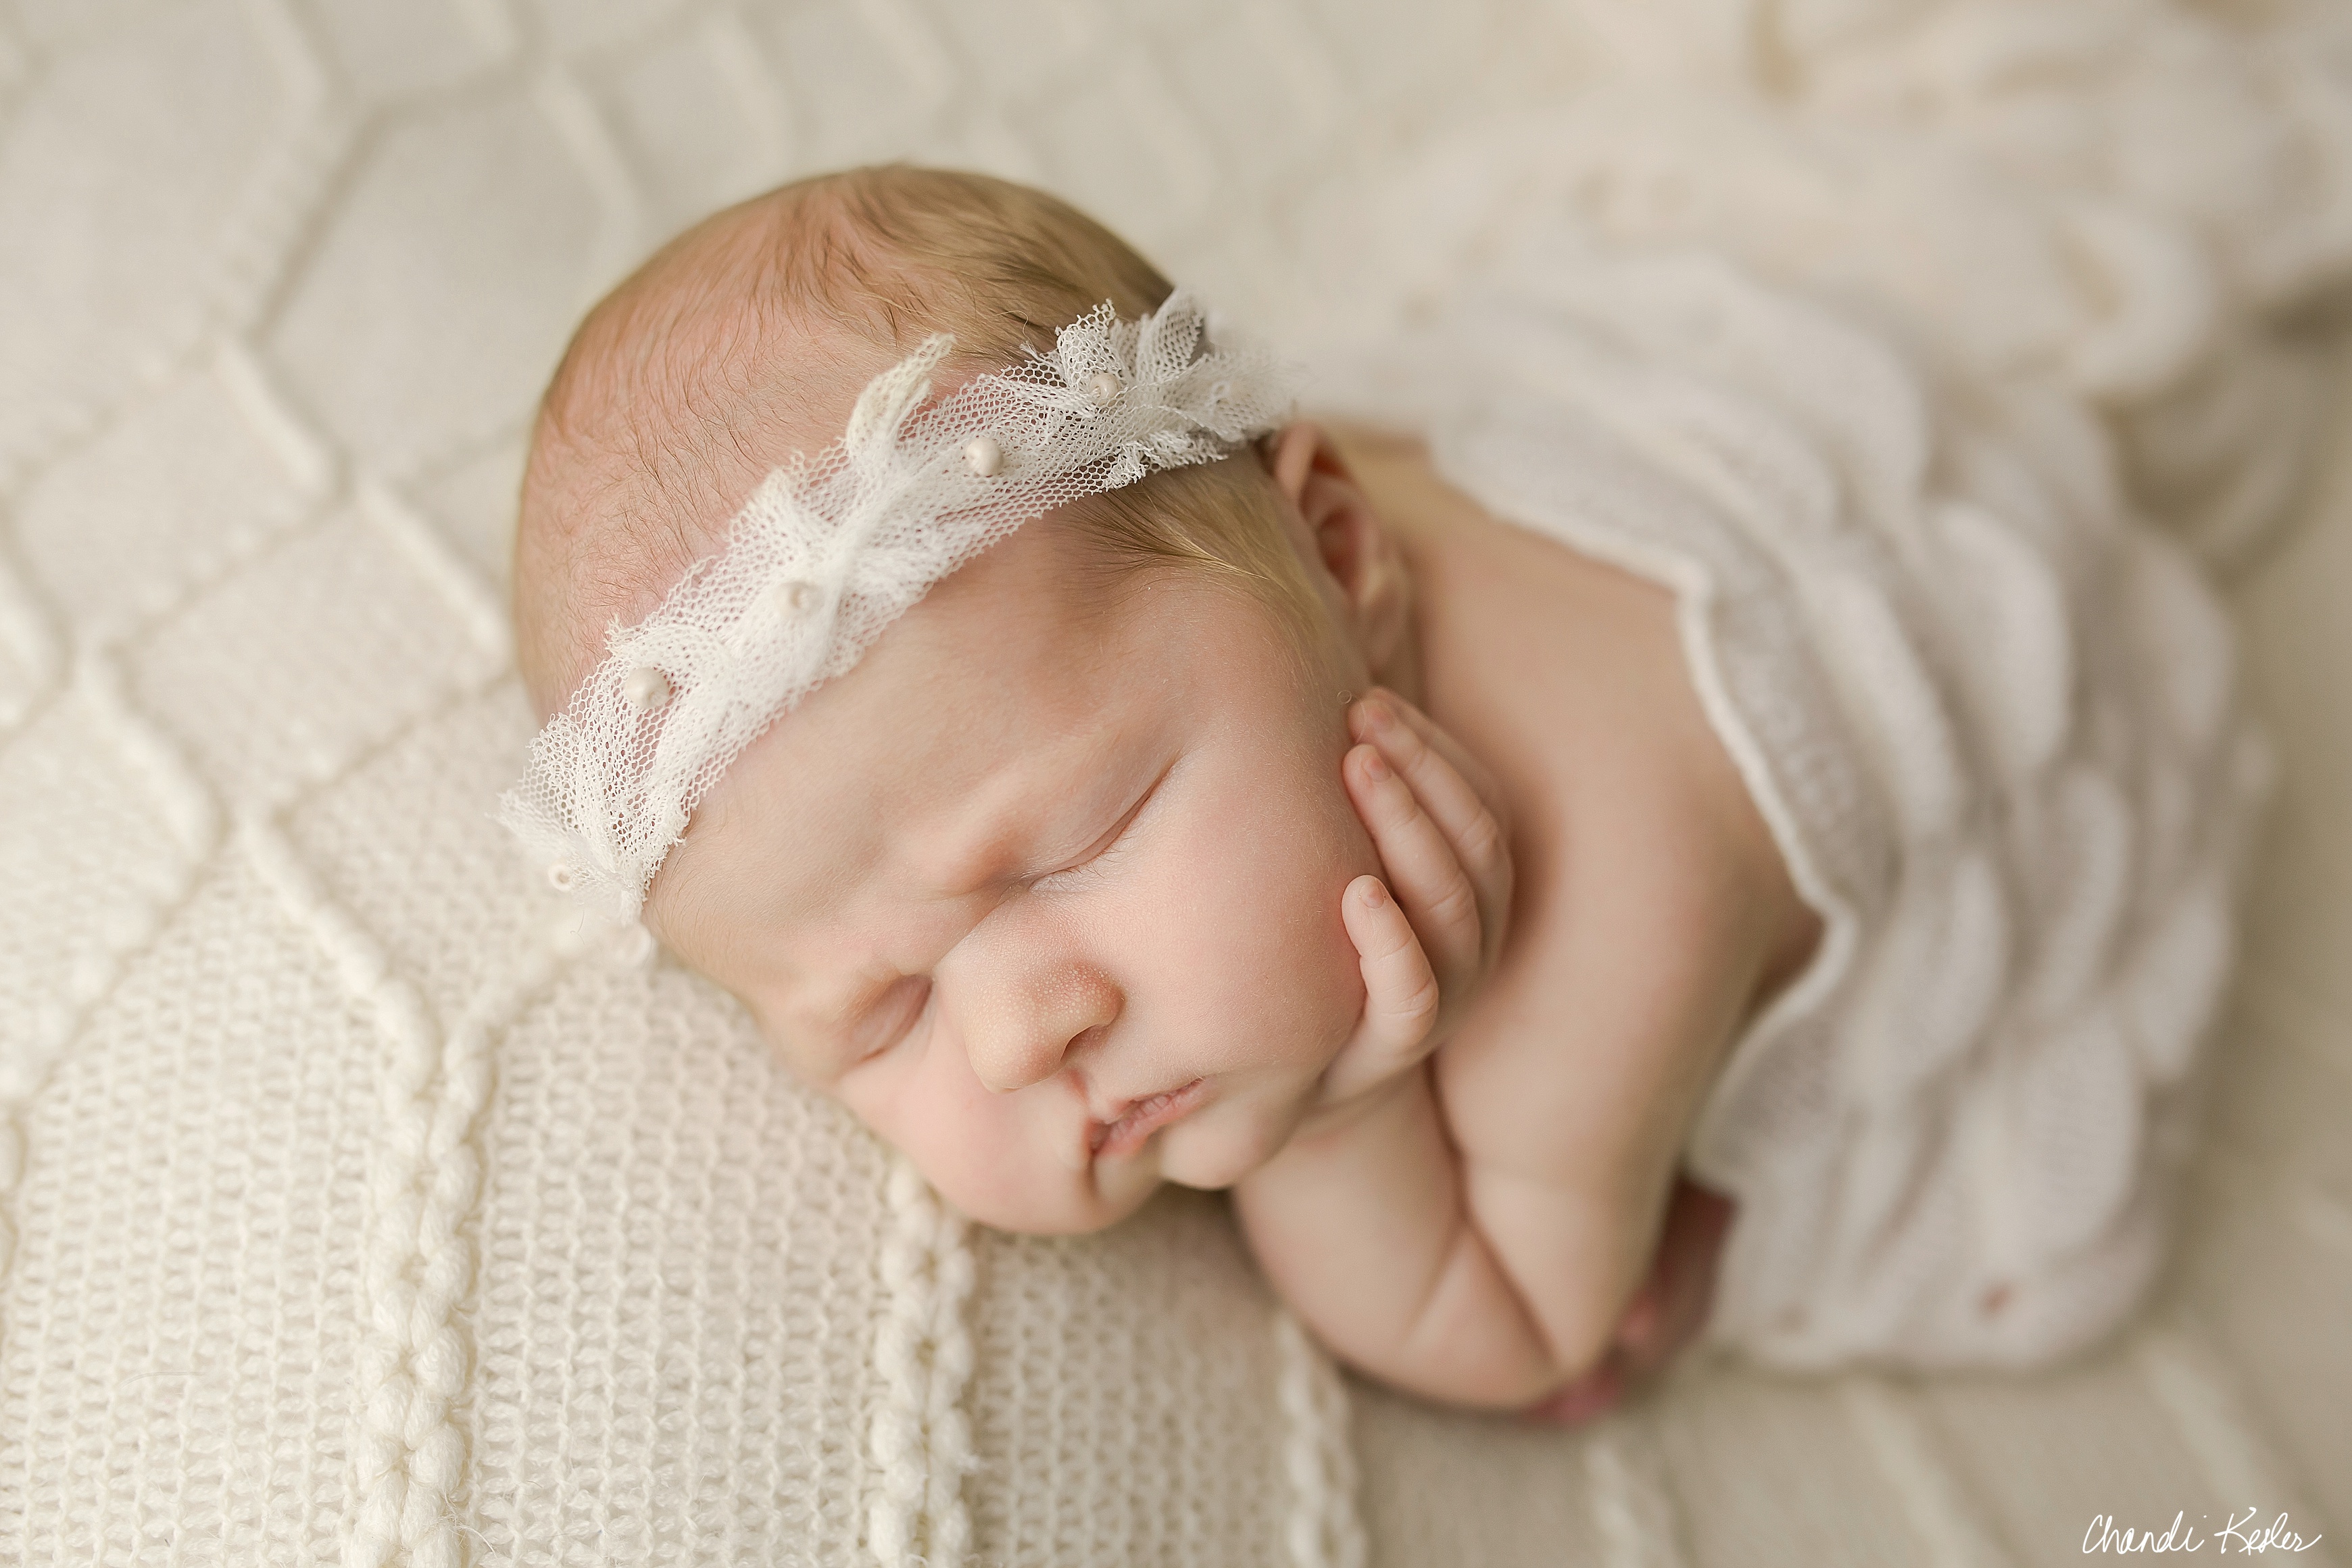 Pontiac IL Newborn Photographer | Chandi Kesler Photography